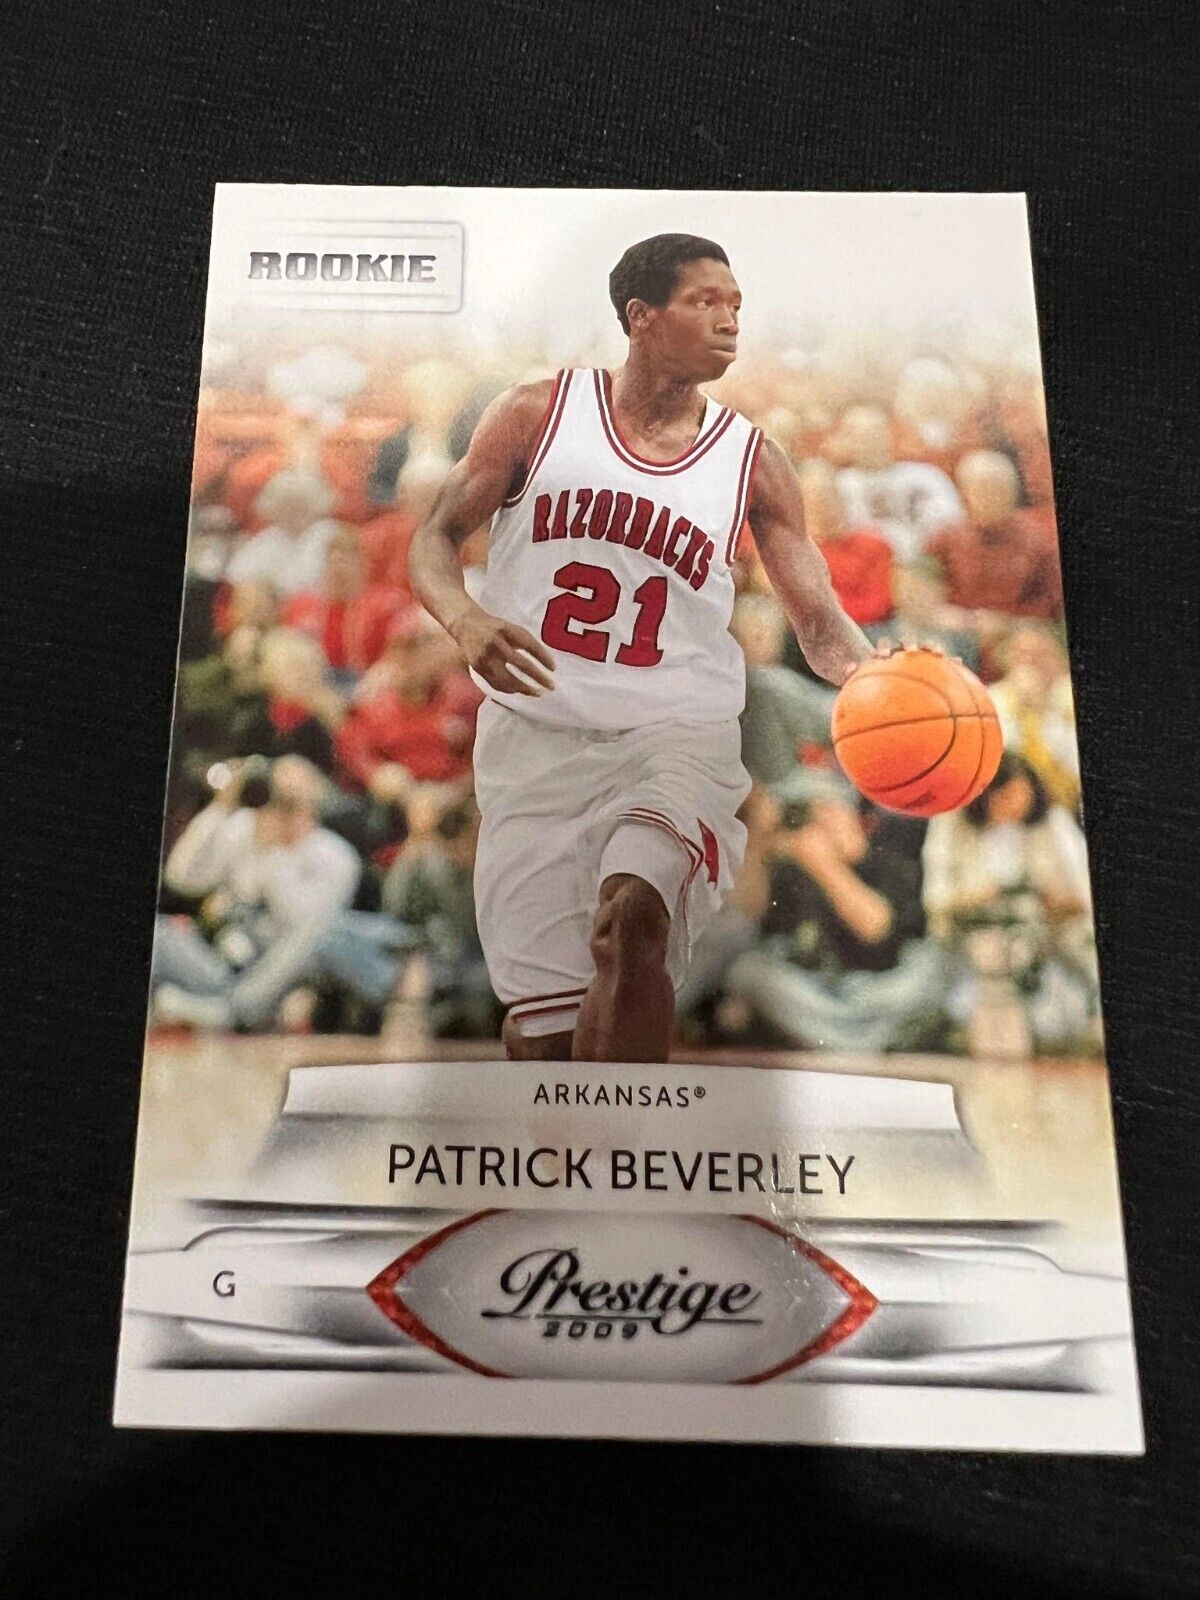 PATRICK BEVERLEY 2009-10 Panini Prestige #200 Arkansas Razorbacks Rookie Card RC. rookie card picture